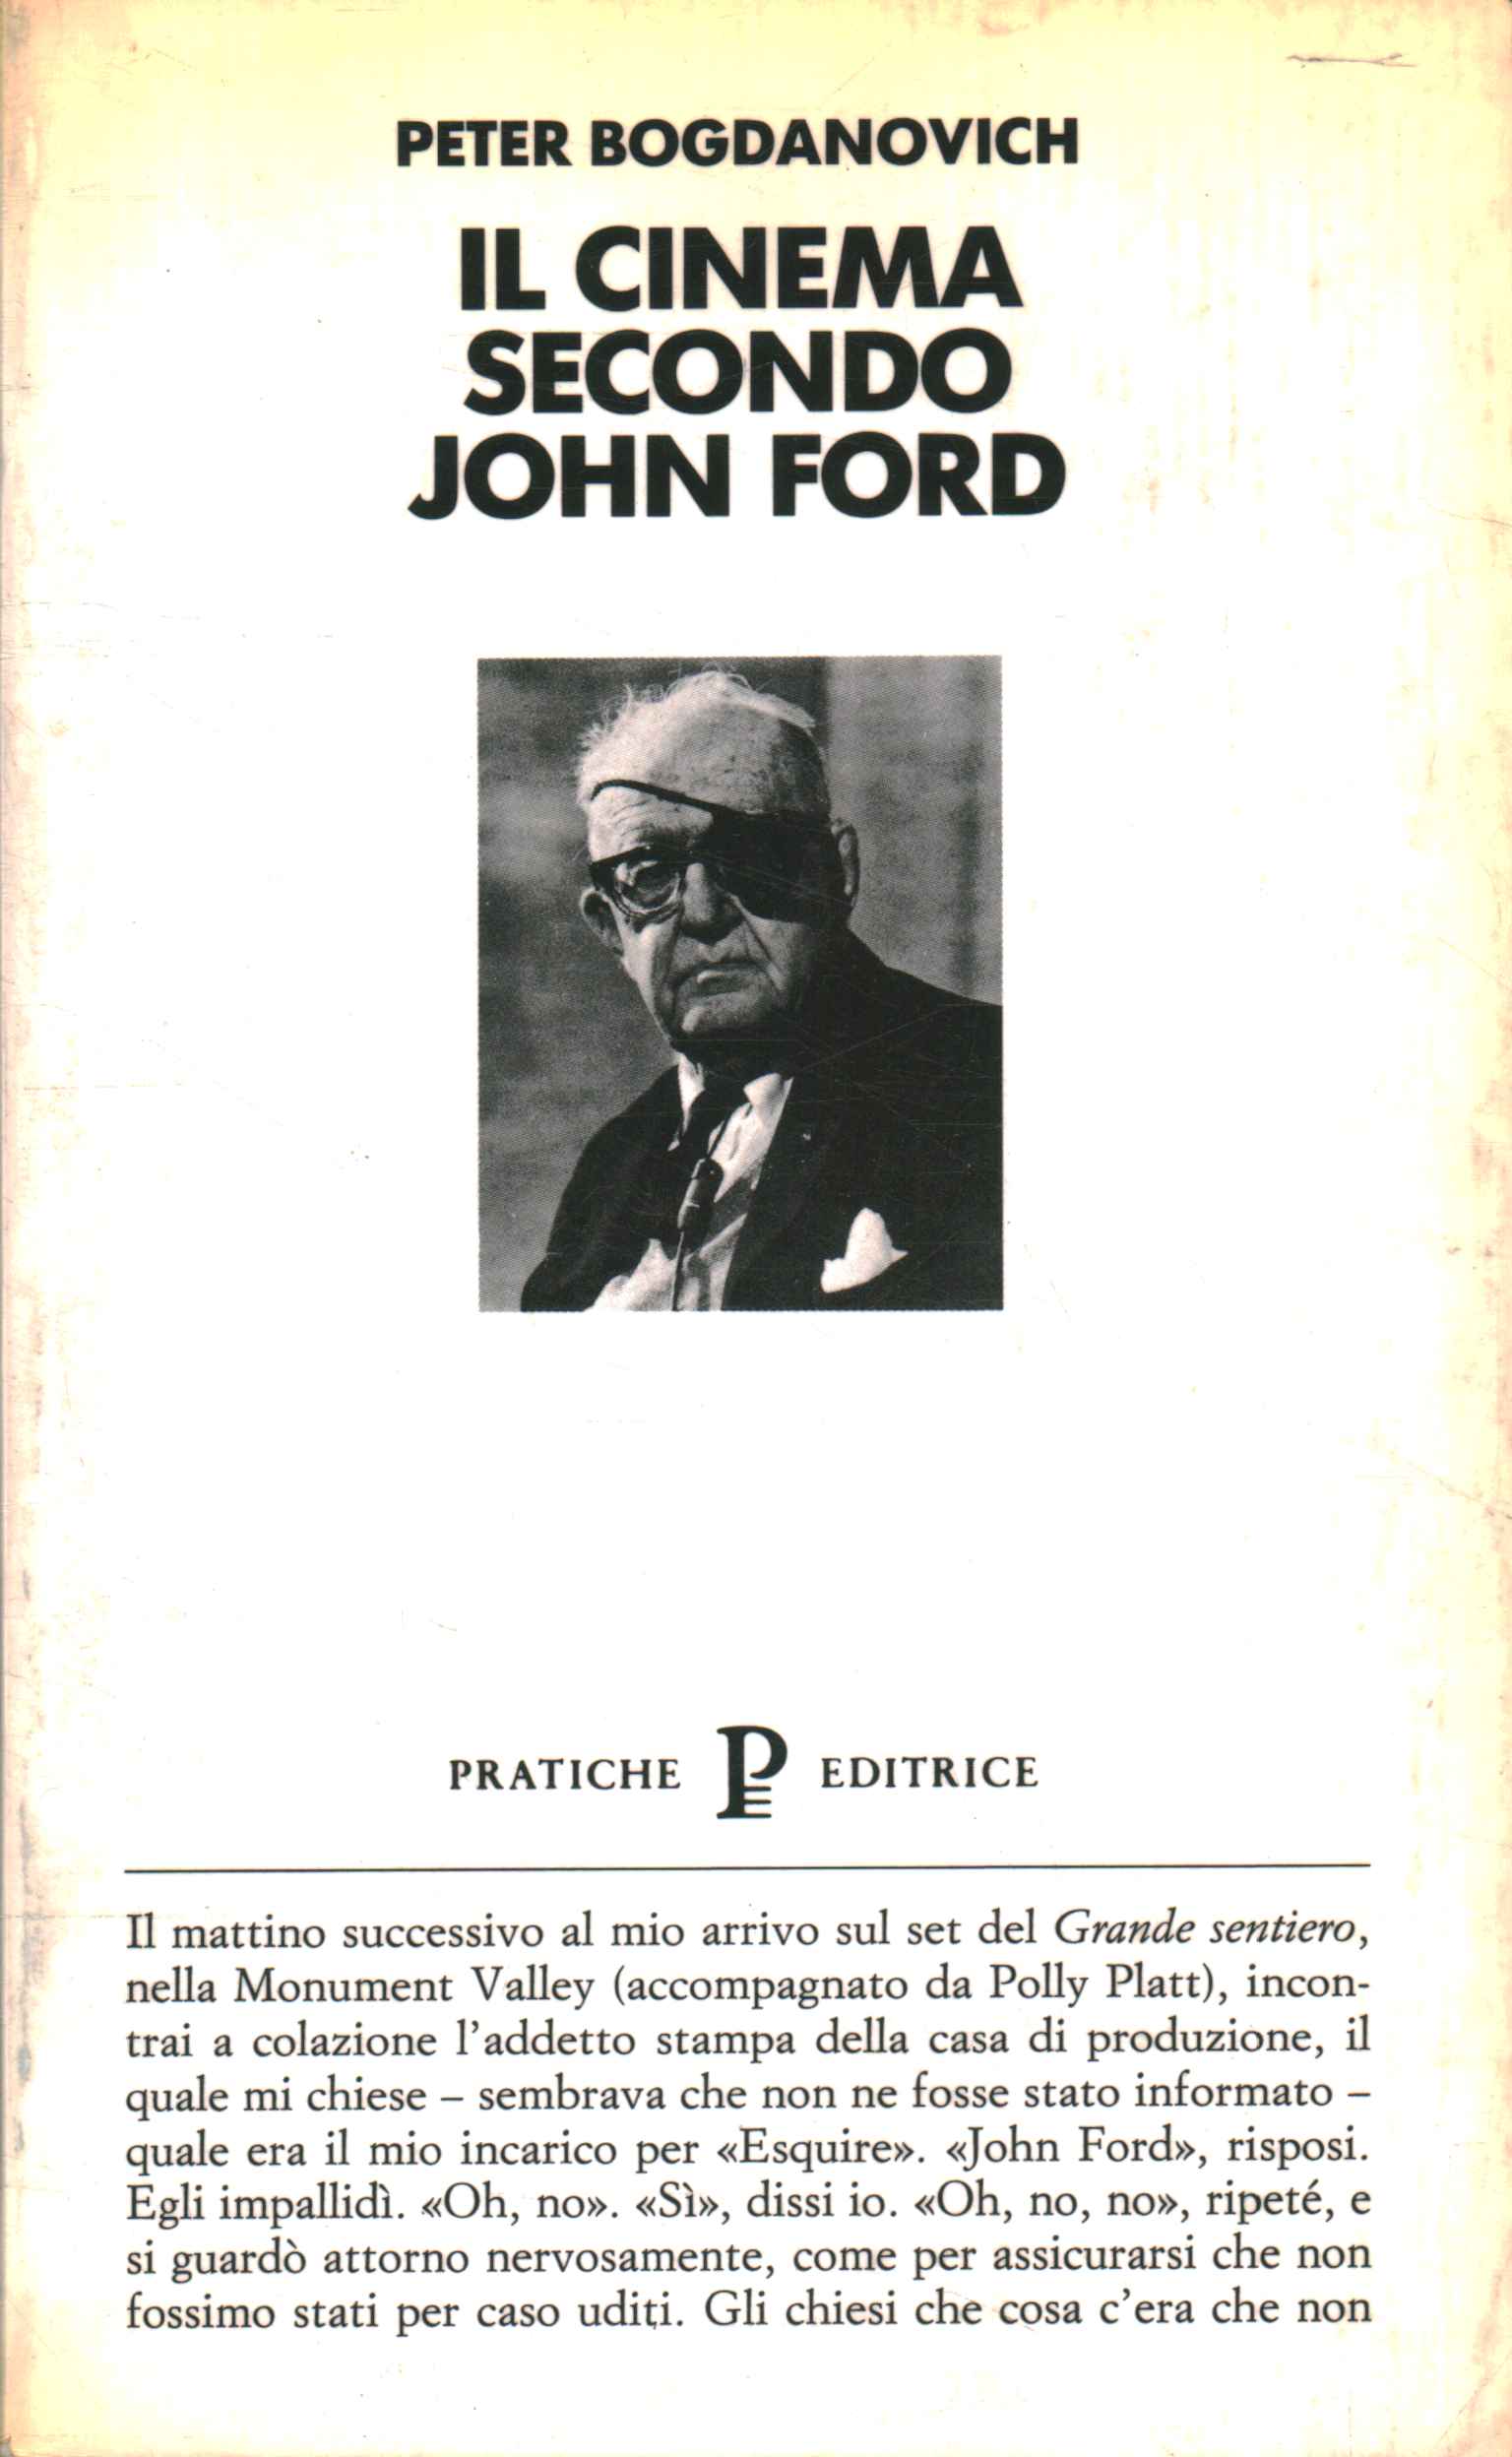 Cinema according to John Ford